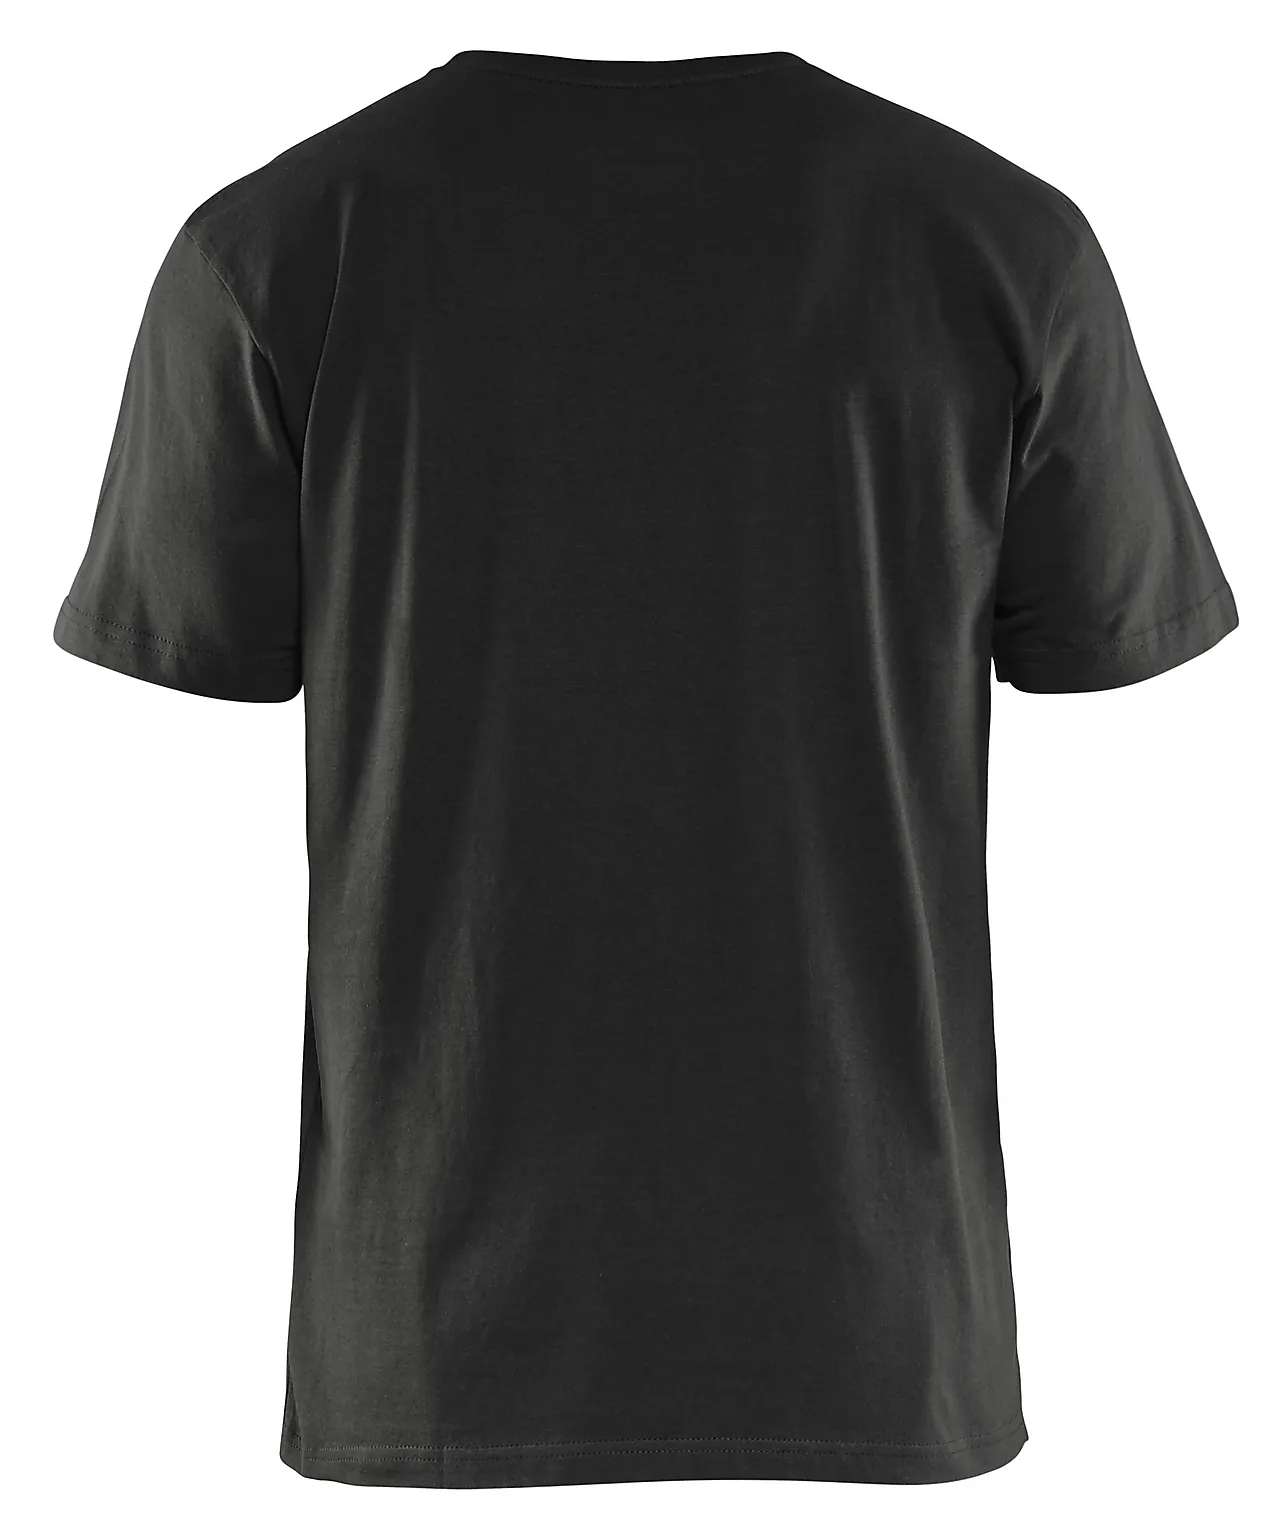 T-skjorte 5 pakk 332510429900xs 5 pakk svart null - null - 3 - Miniatyr